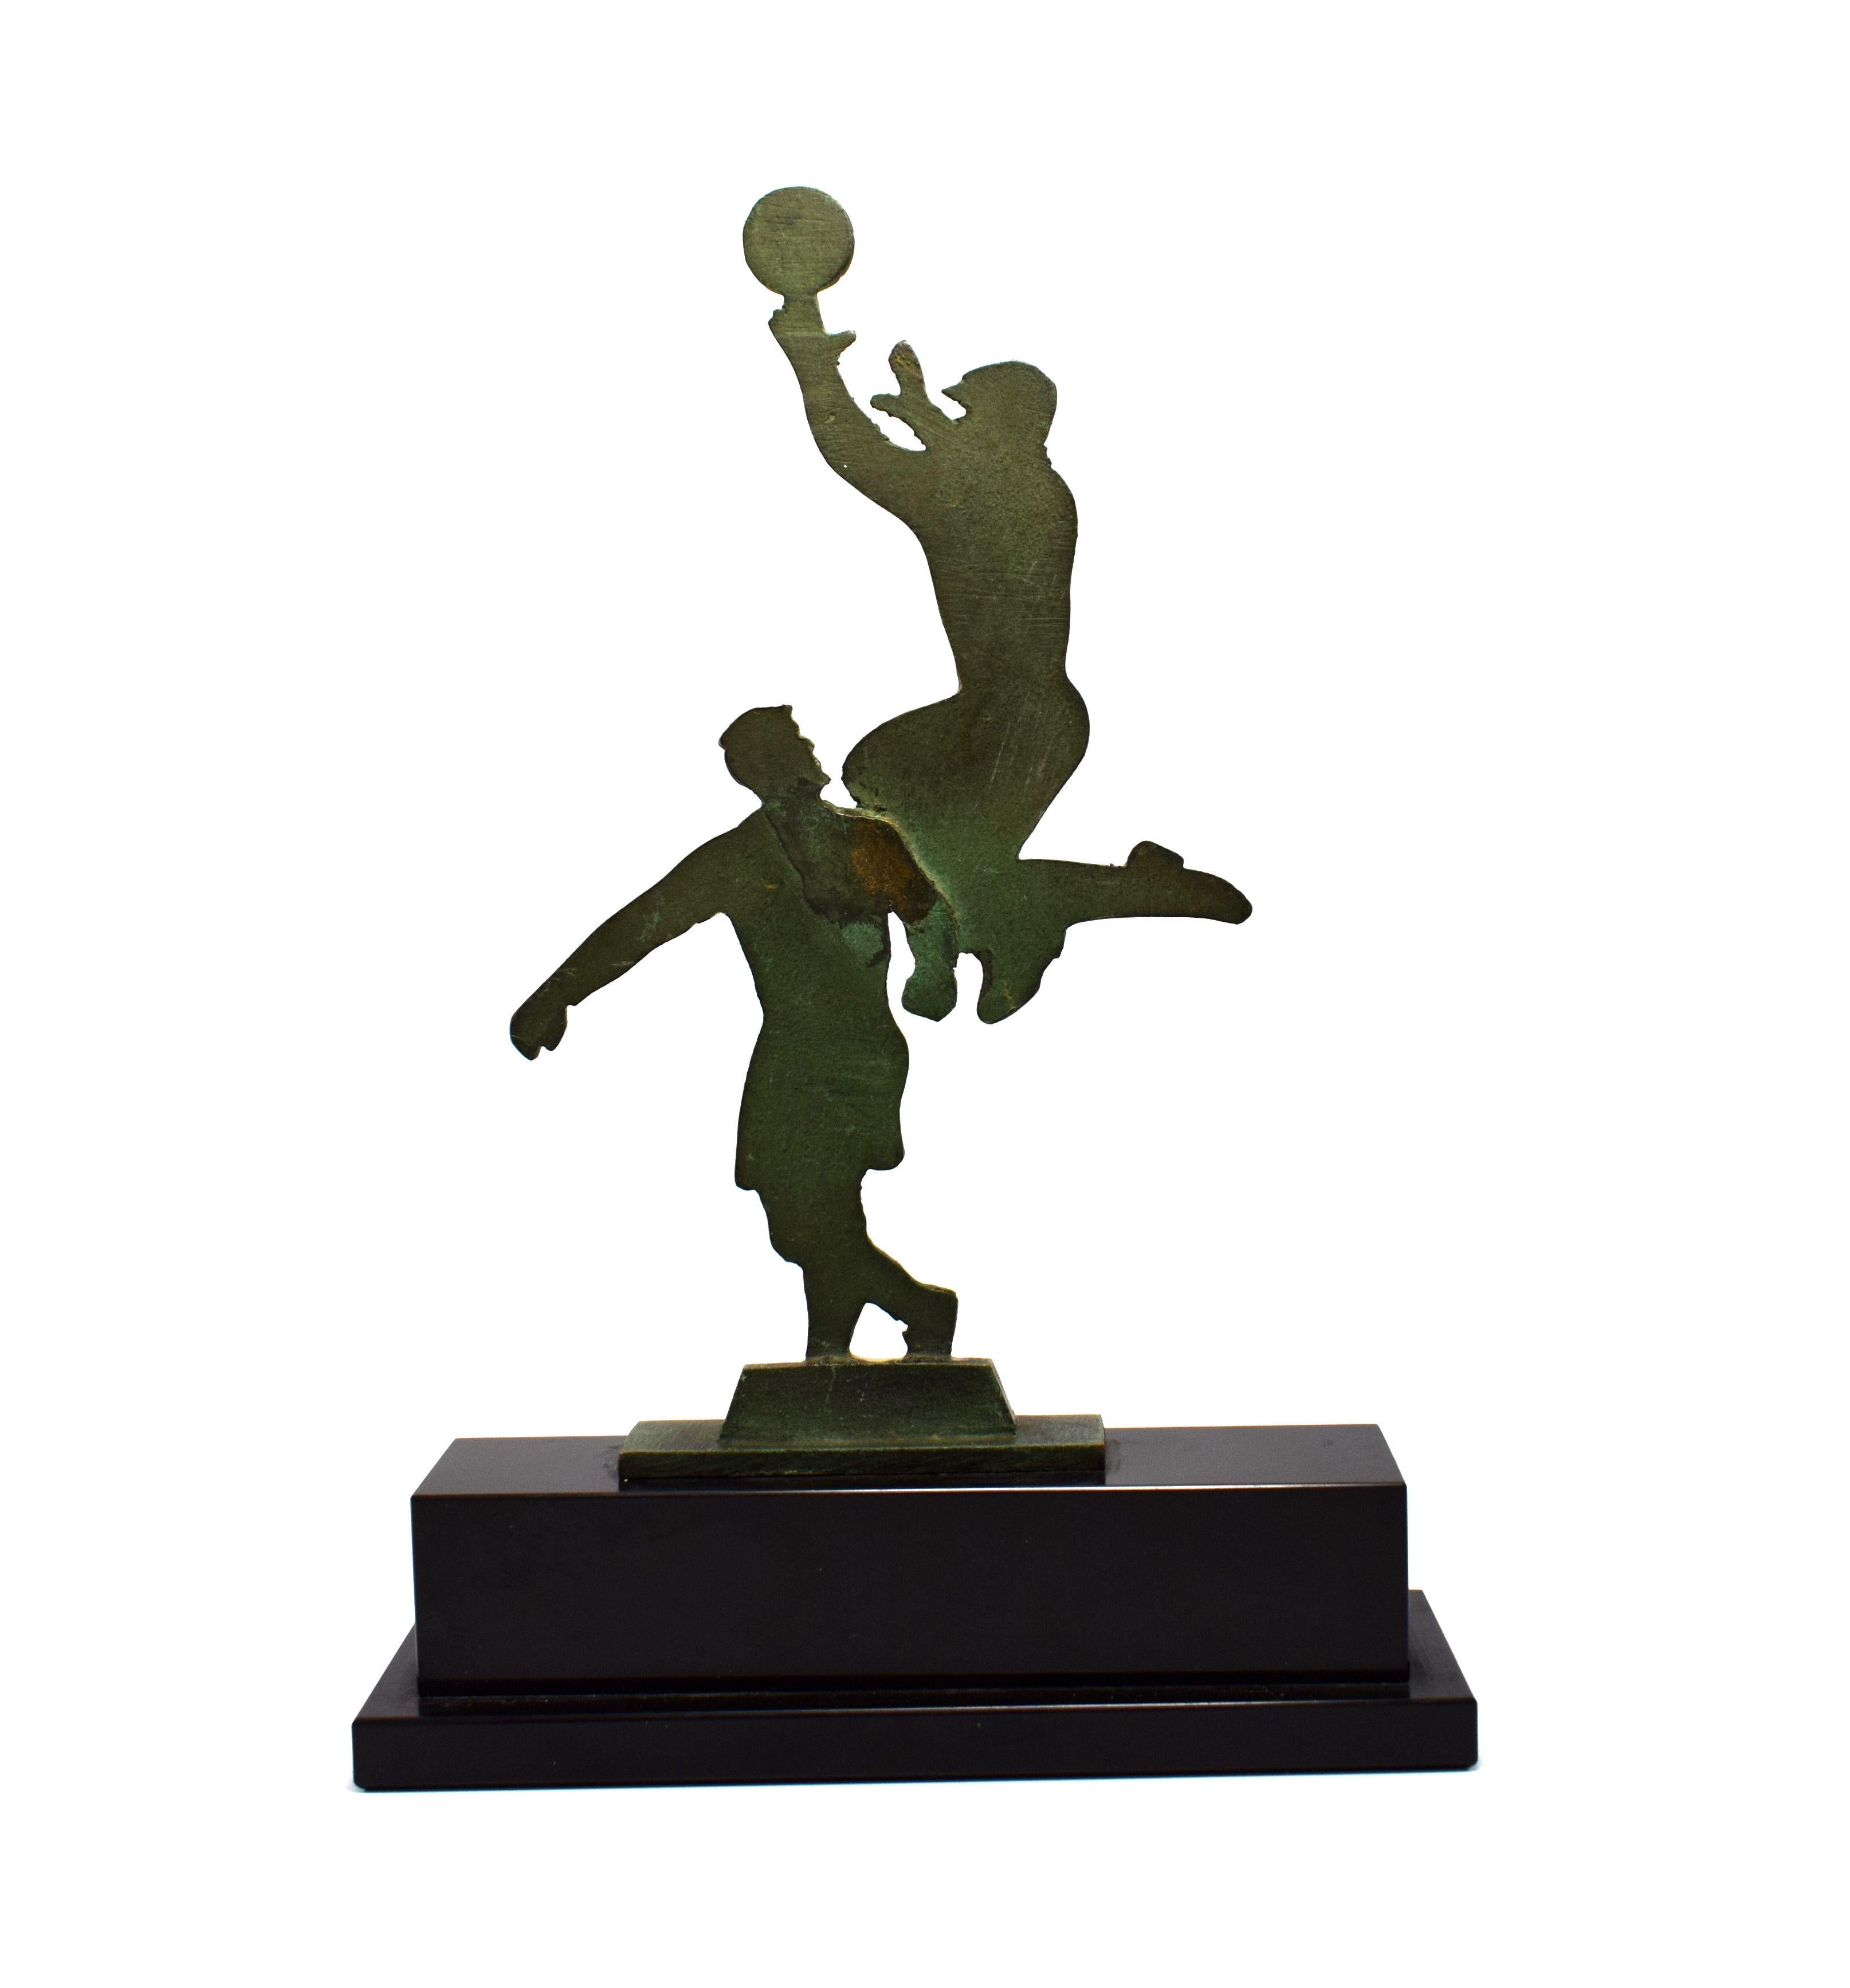 20th Century Art Deco Football Trophy, France, circa 1930